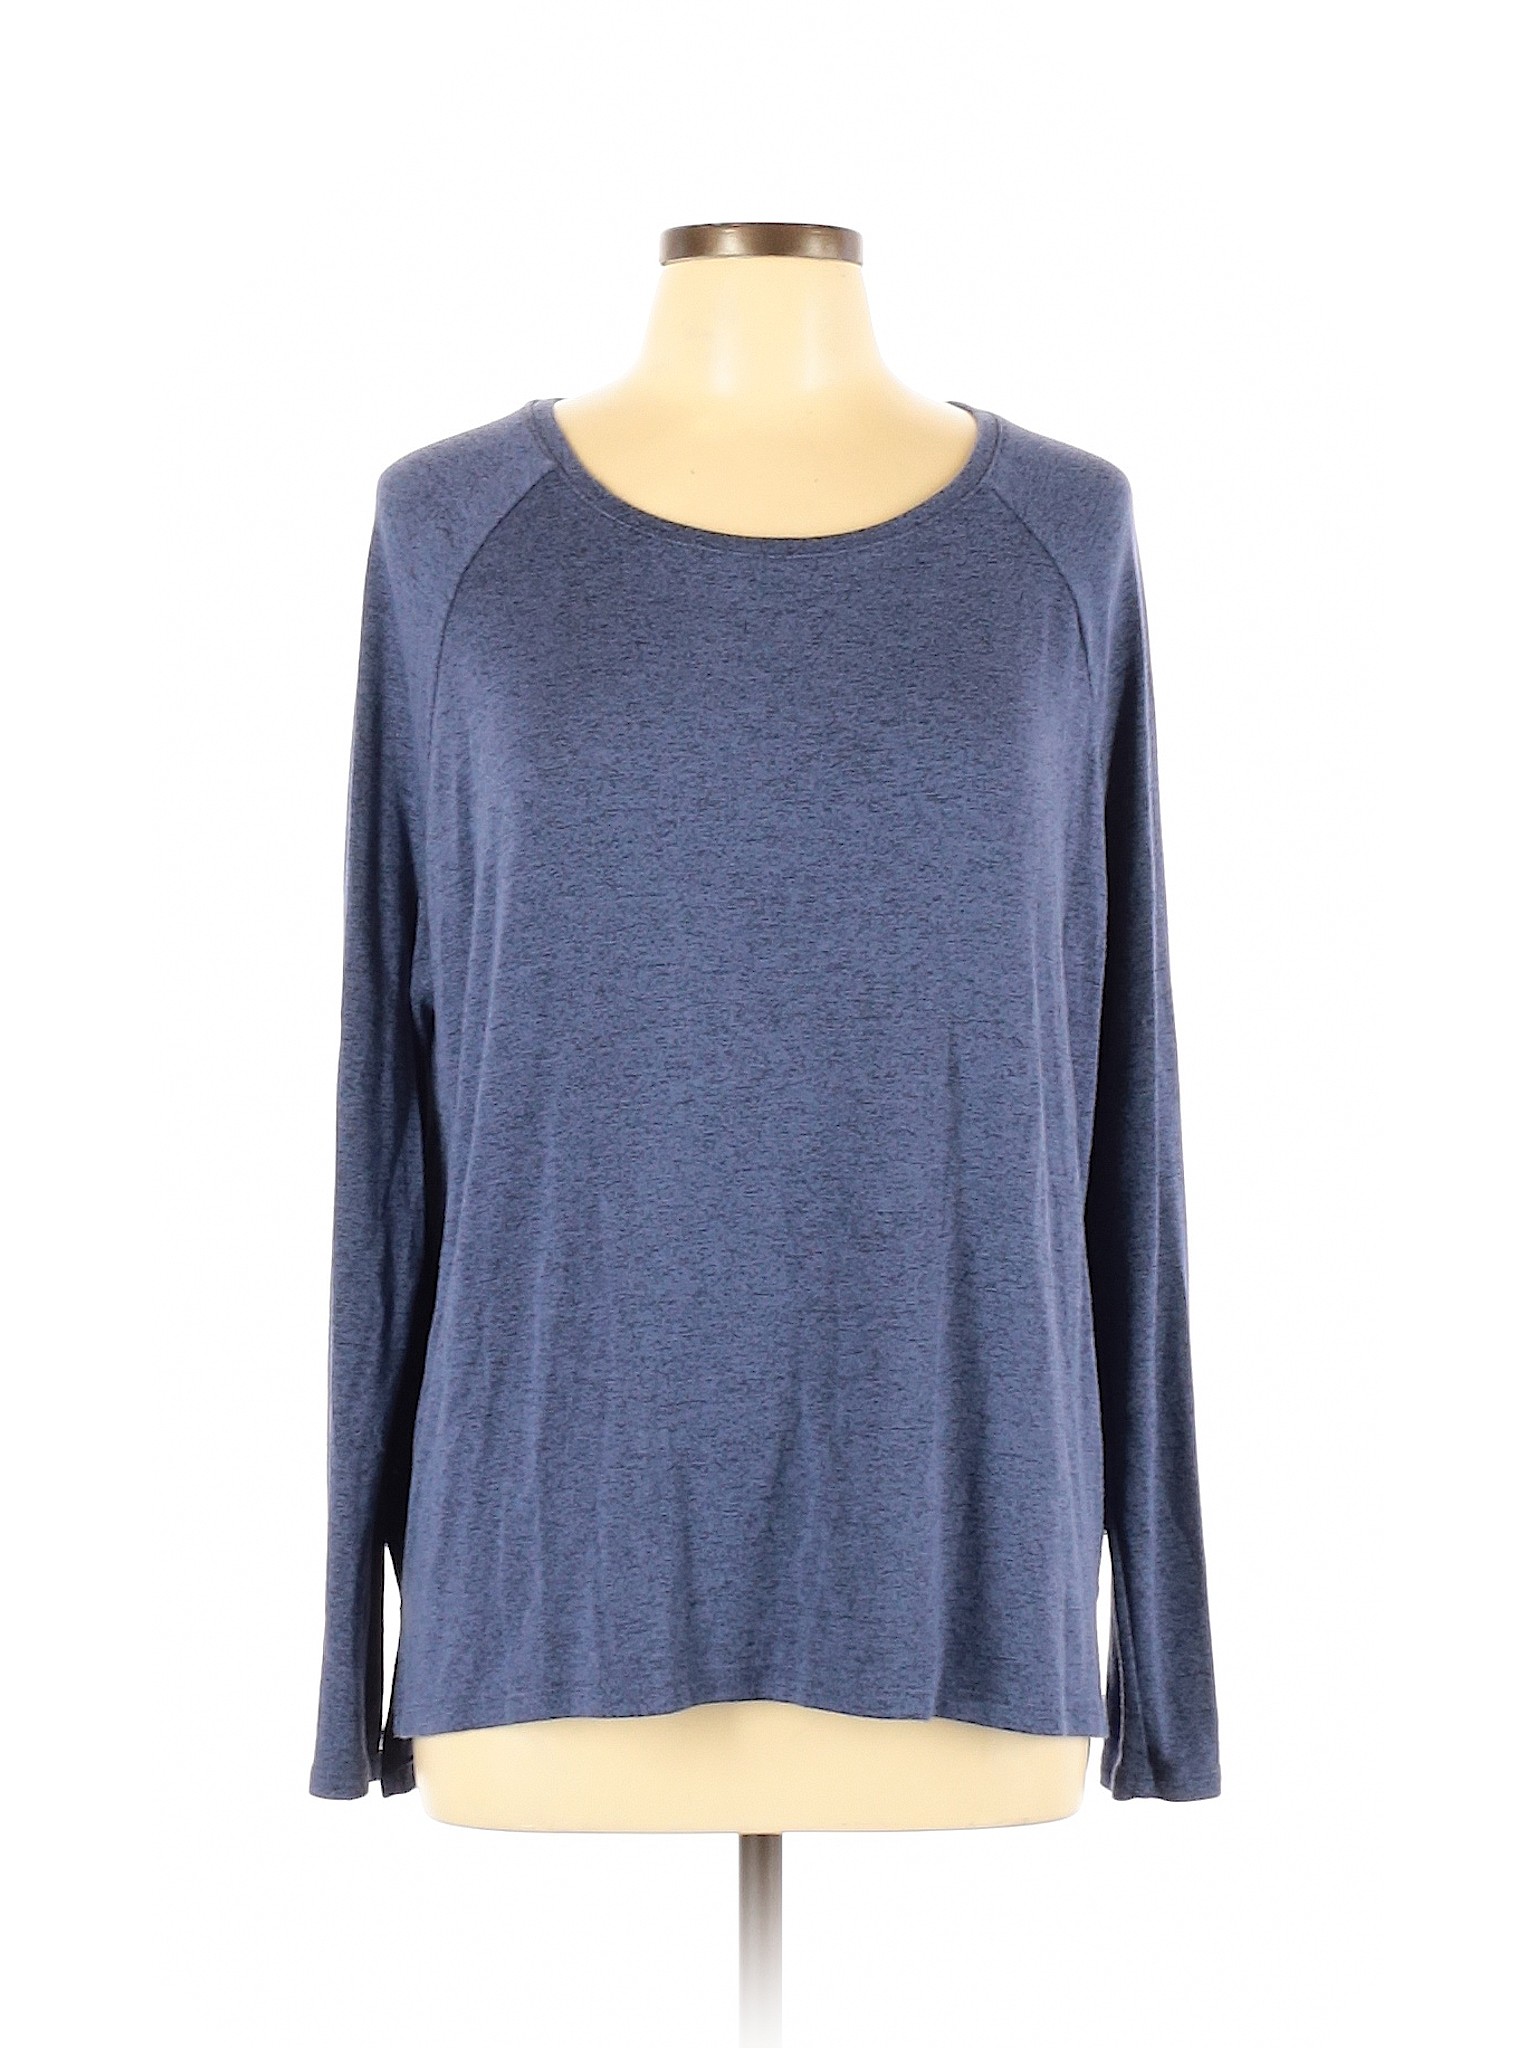 Old Navy Women Blue Pullover Sweater L | eBay